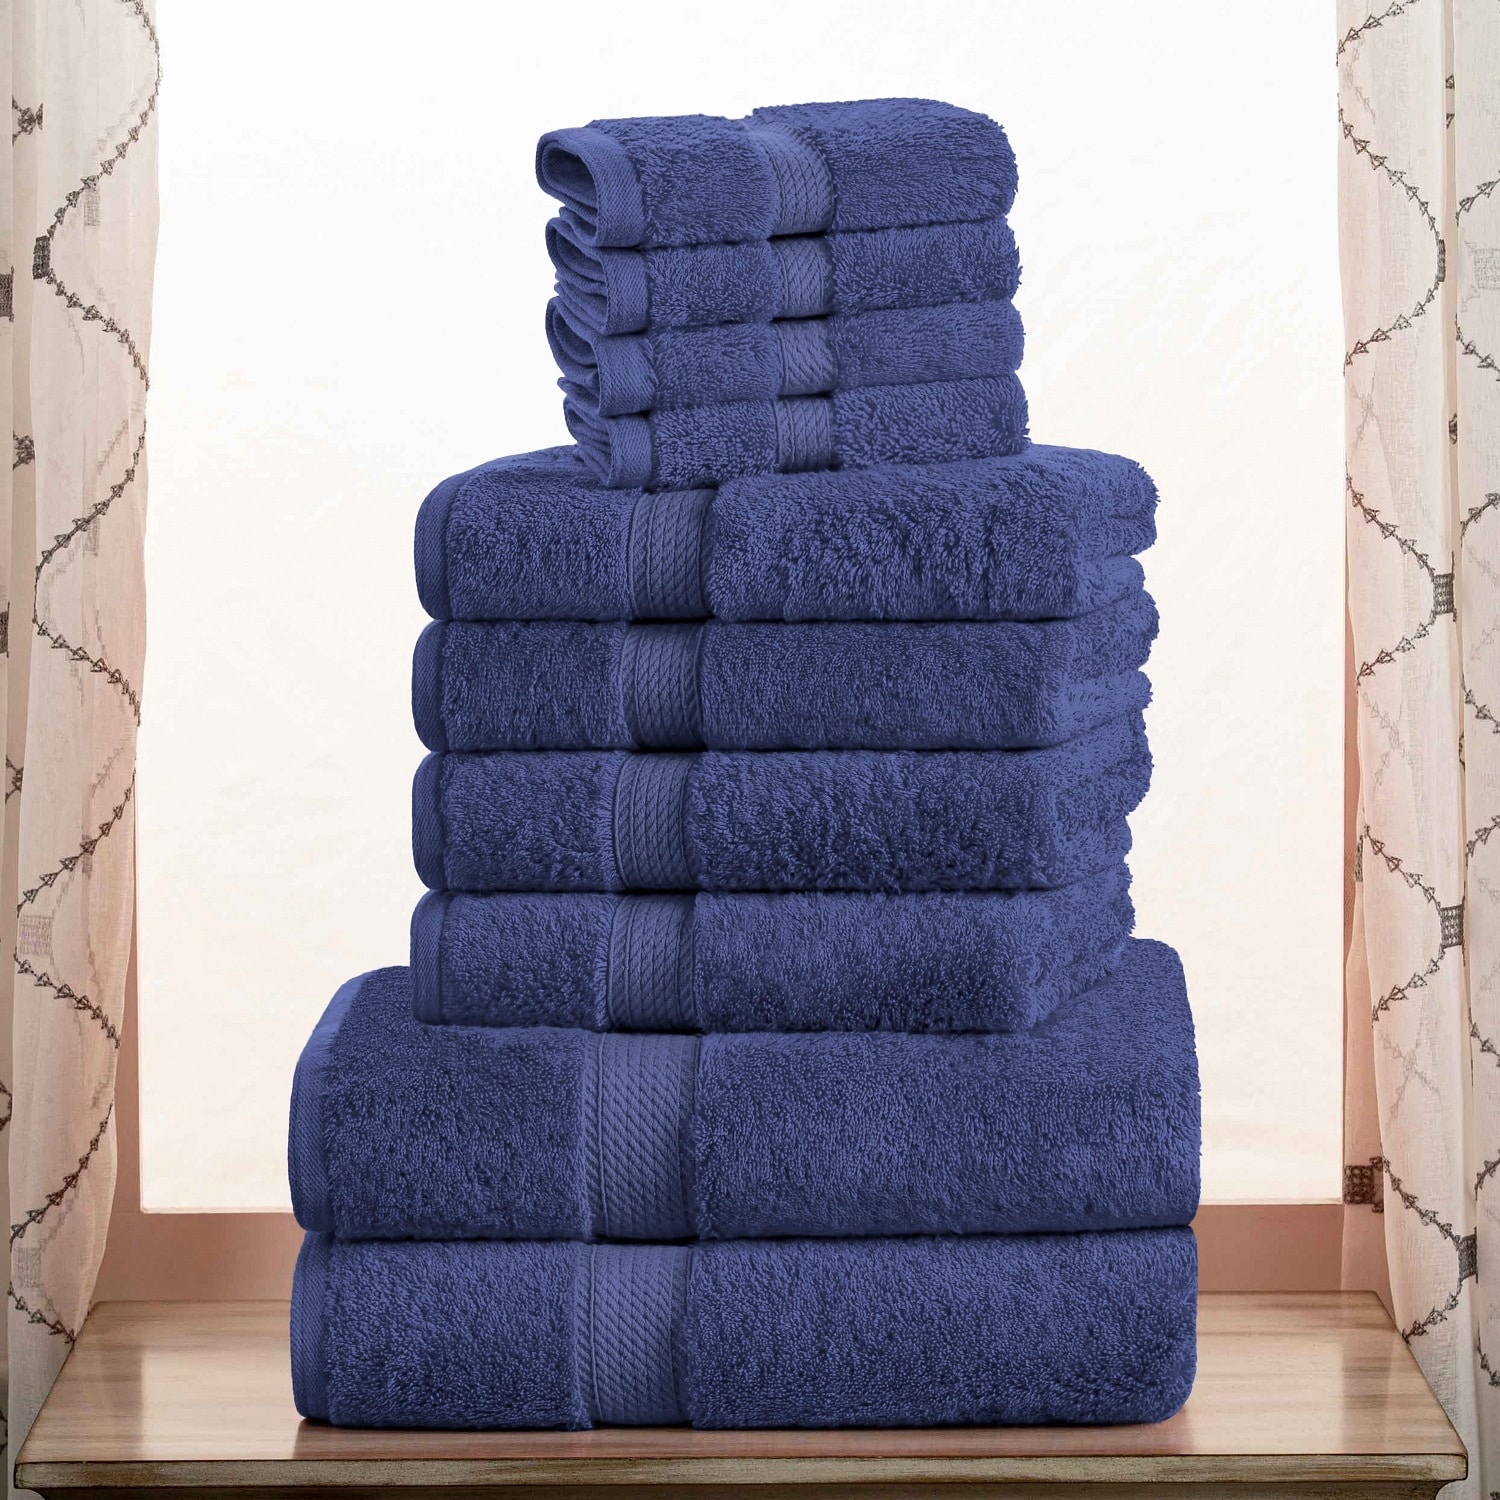 Superior Turkish Cotton Solid Heavyweight Bath Sheet Set of 2 - On Sale -  Bed Bath & Beyond - 38236551